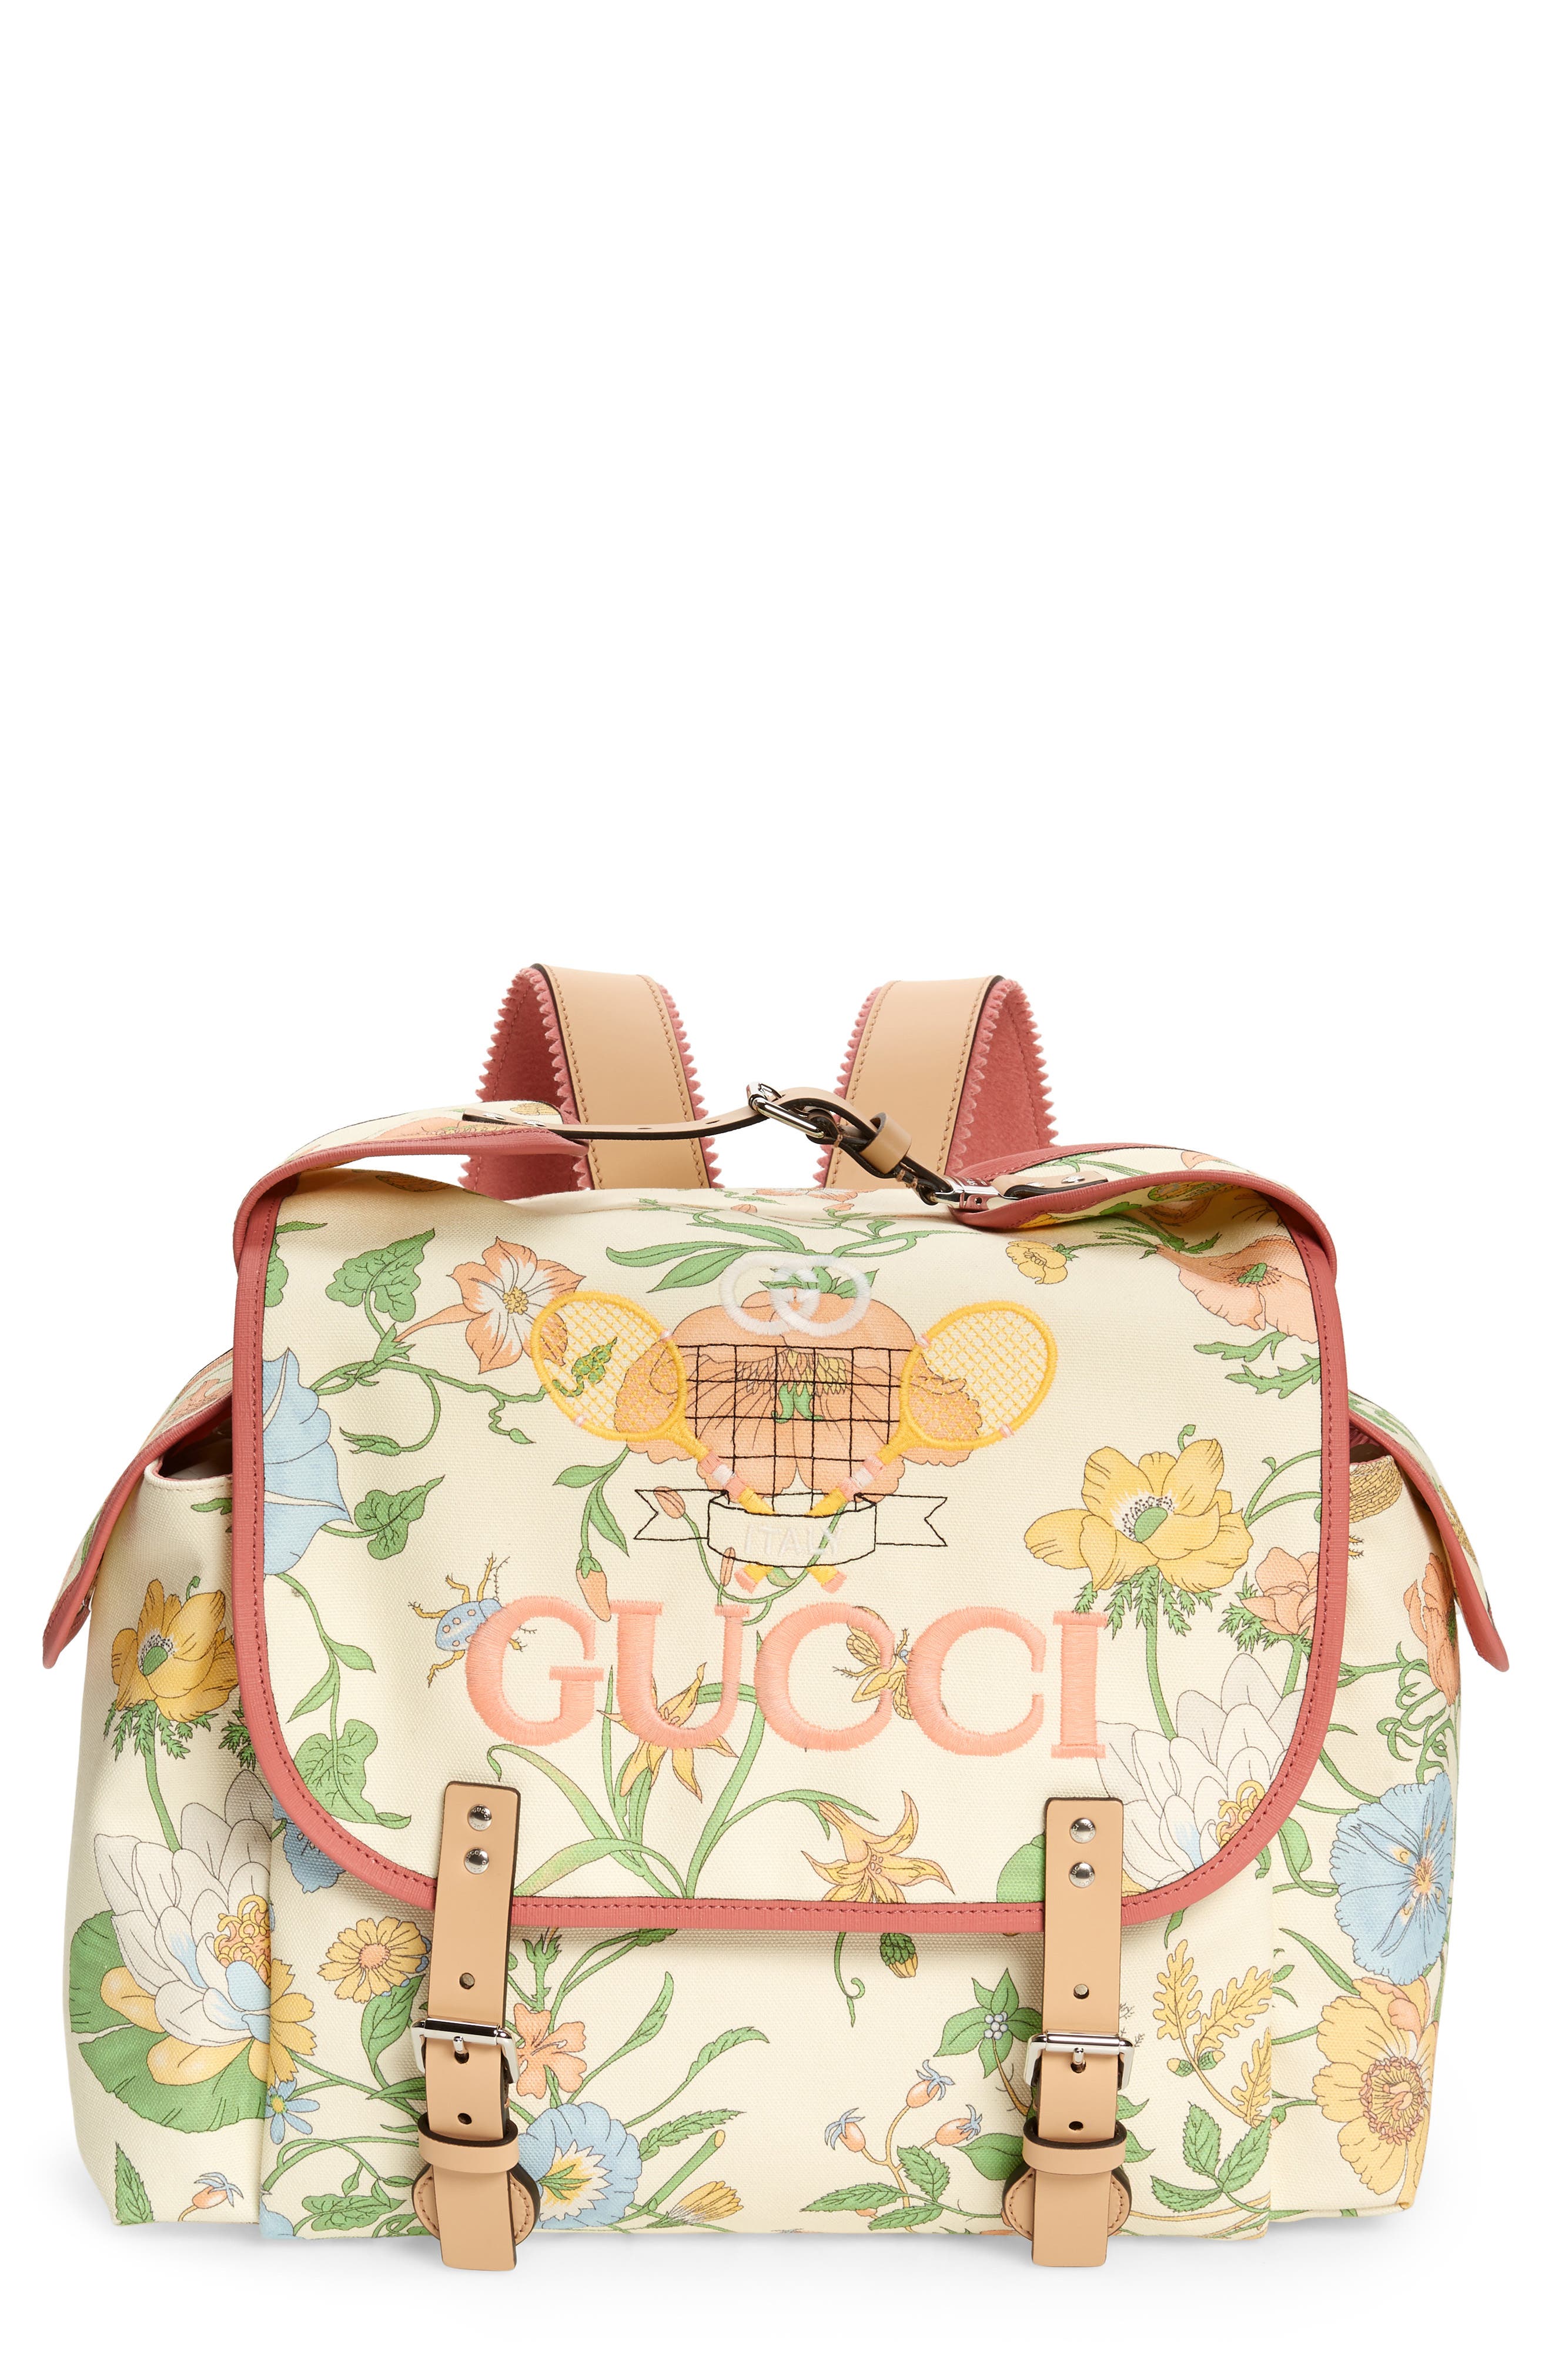 gucci backpack flower print